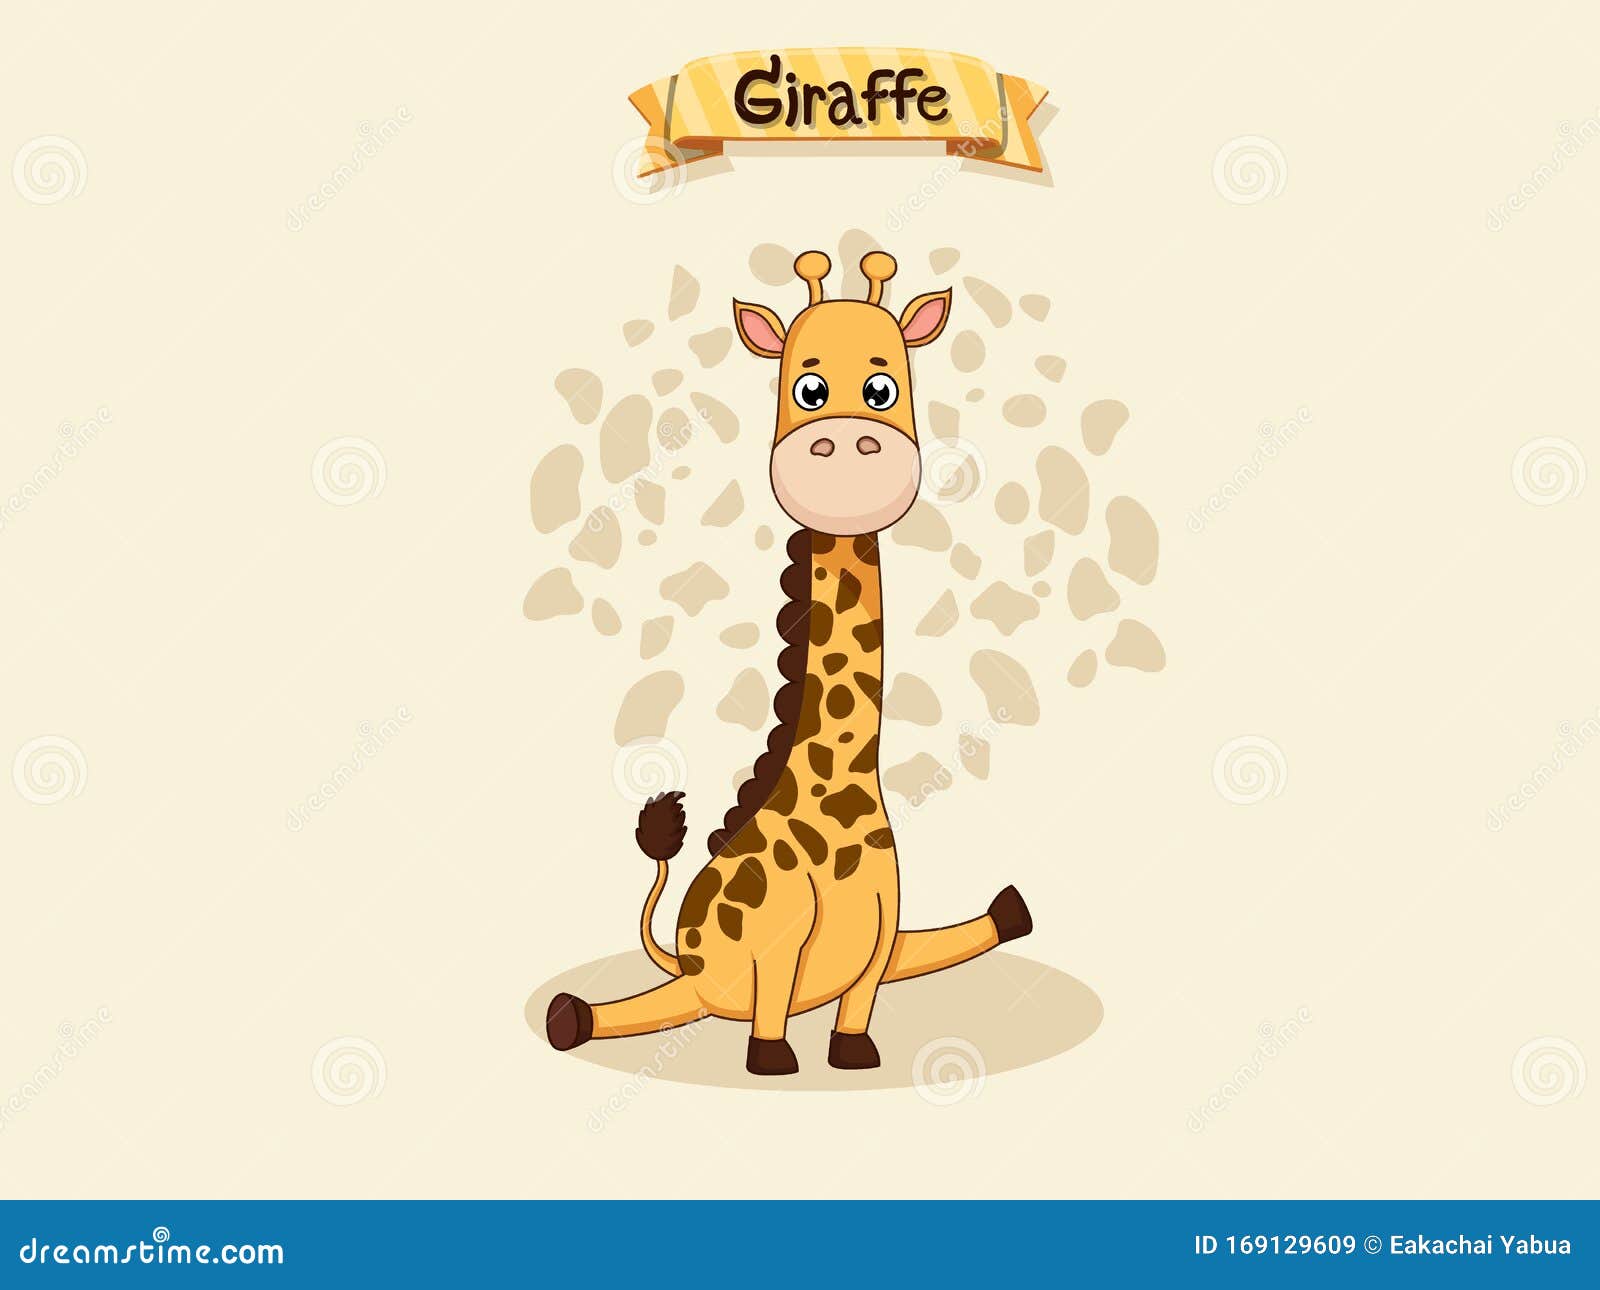 Cute Cartoon Giraffe Characters. Kids, Baby Vector Art Illustration with  Funny Animal Cartoon Stock Vector - Illustration of board, landscape:  169129609